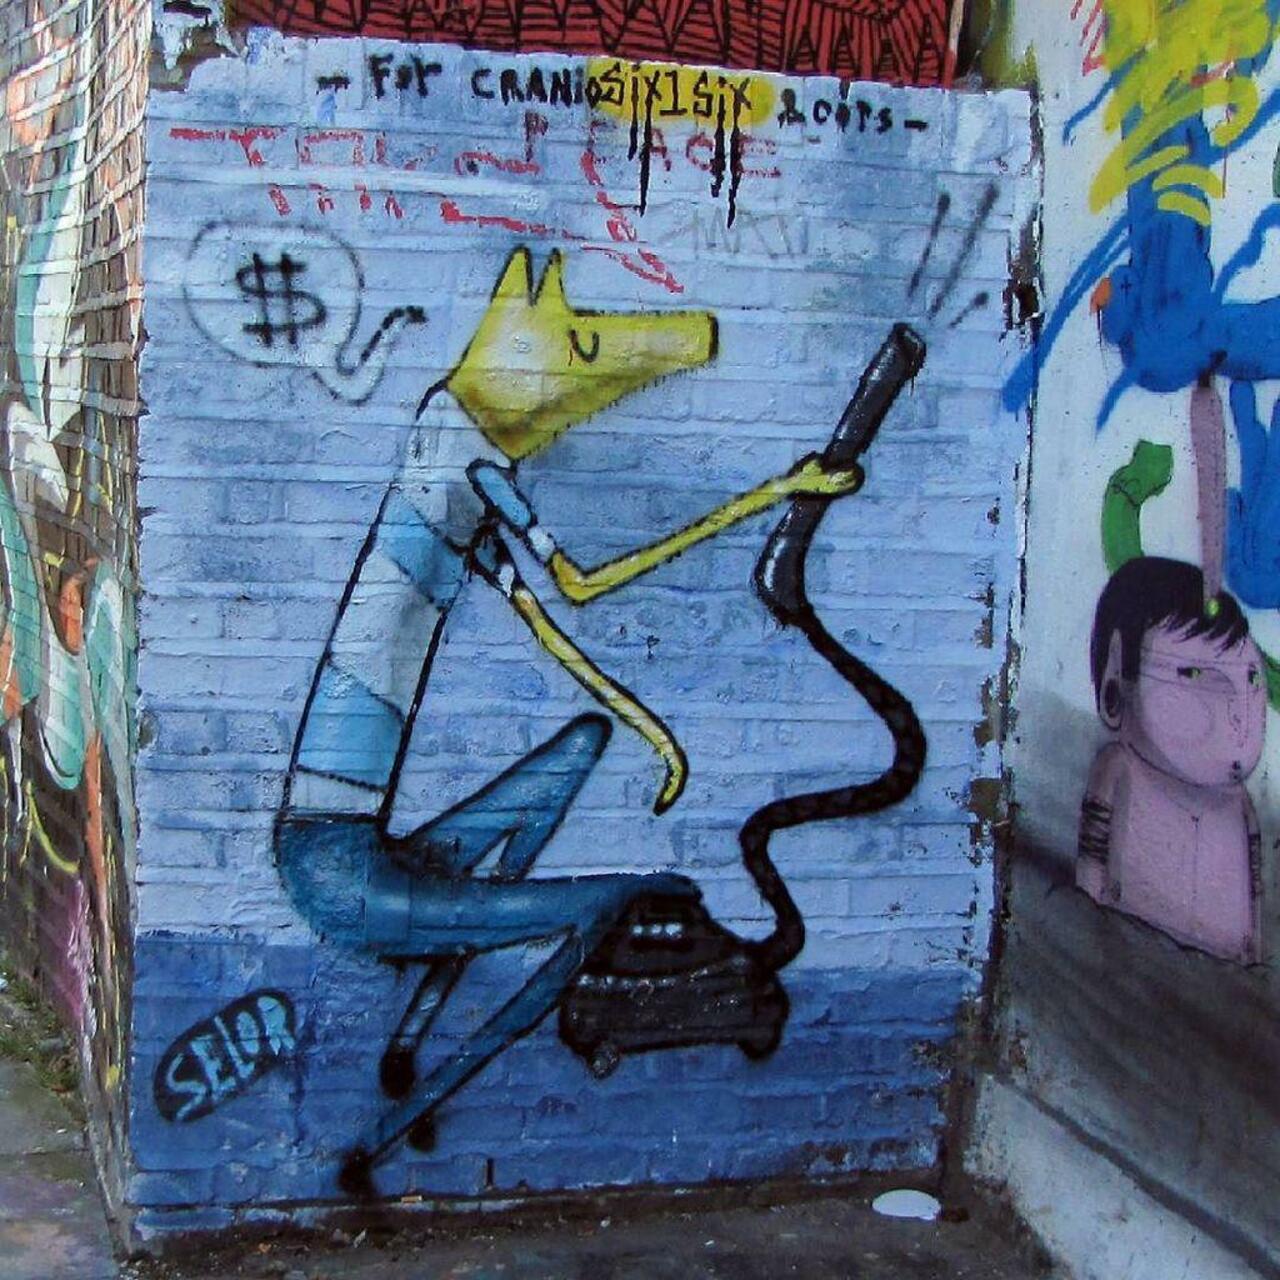 #streetart #graffiti #london #shoreditch #bricklane #urbanart #spraycanart #spraycan #urban #streetphotography #art… http://t.co/3wZzghNBU8